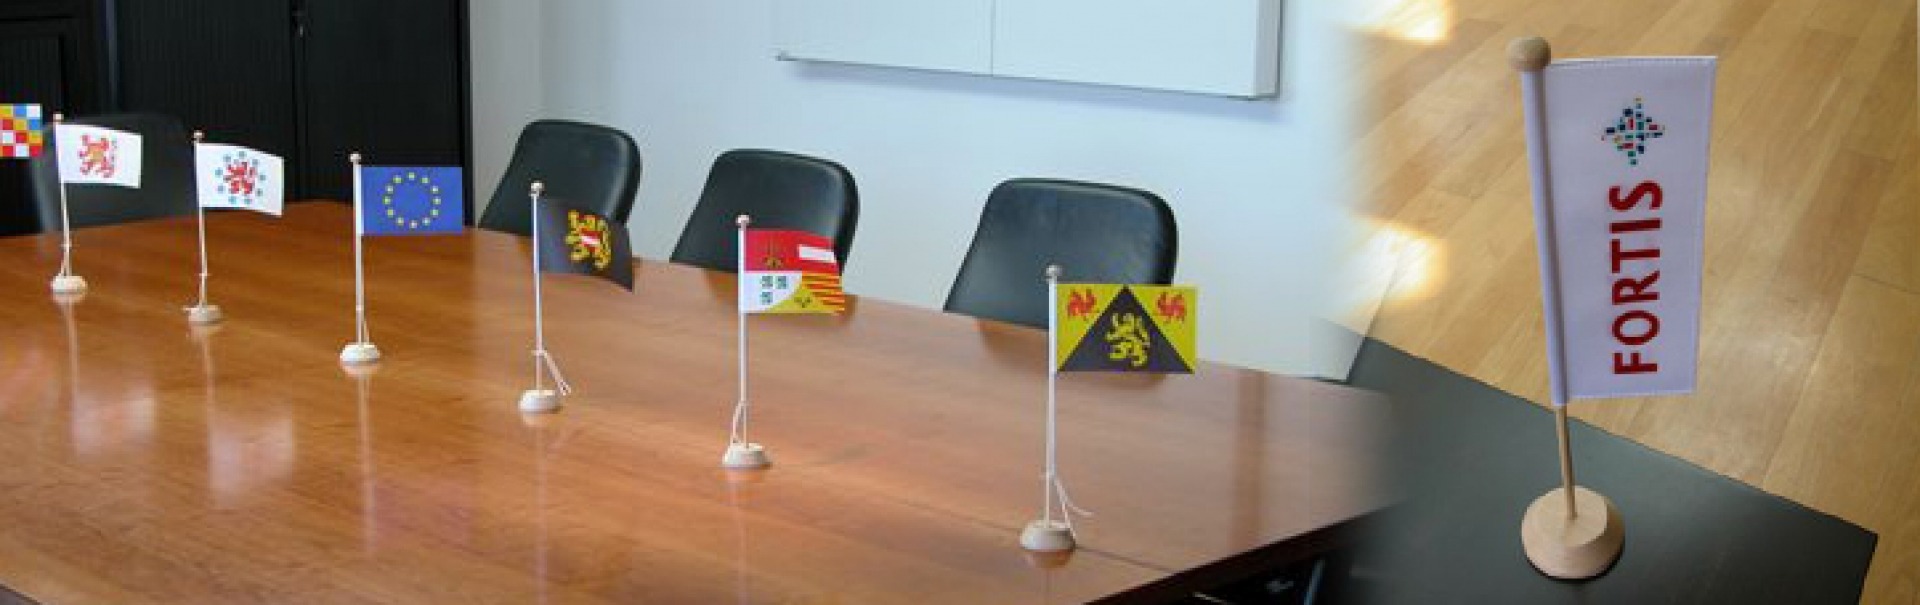 Drapeaux de table meetingroom